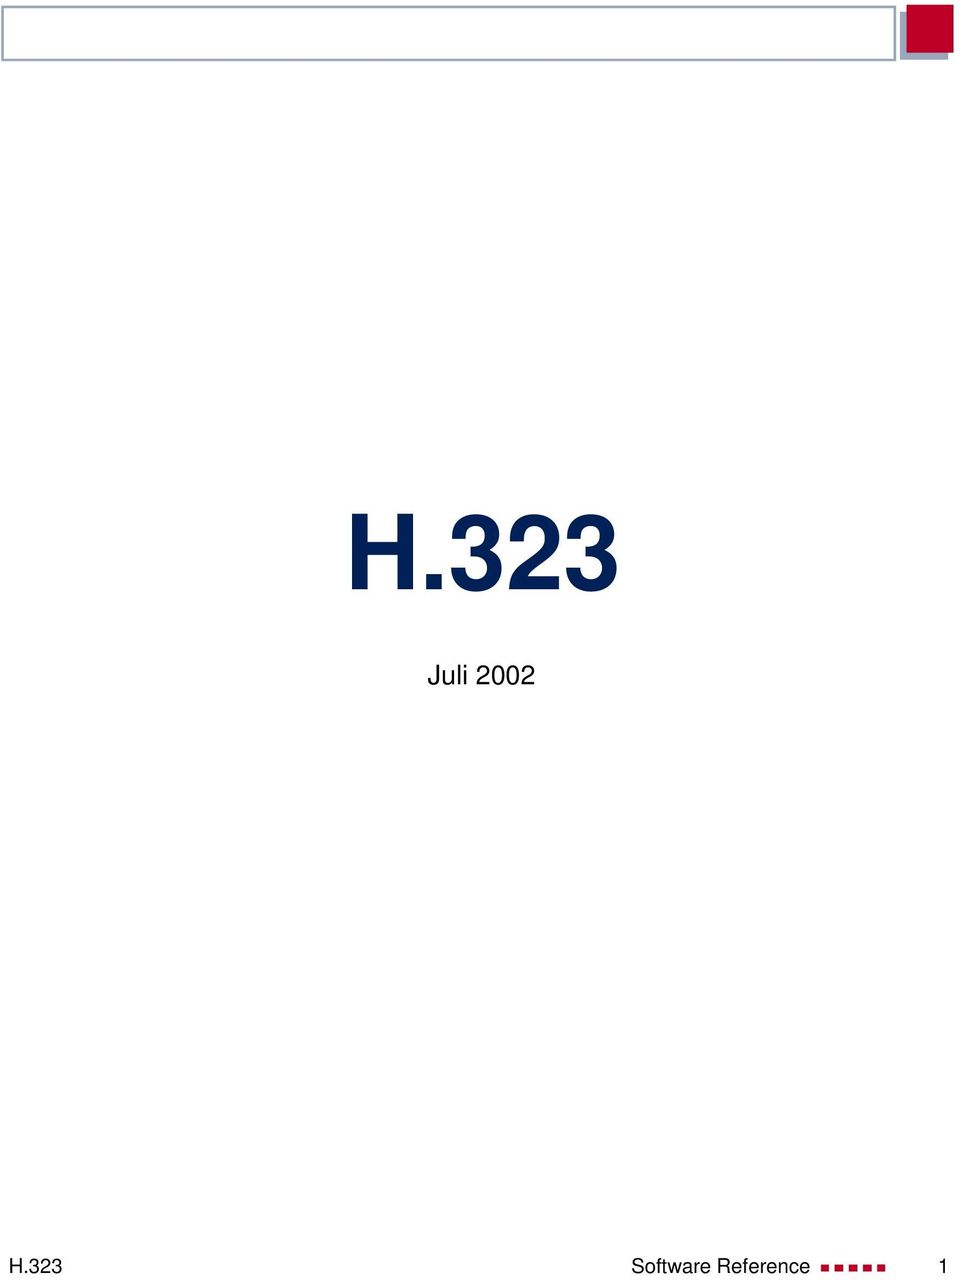 H.323